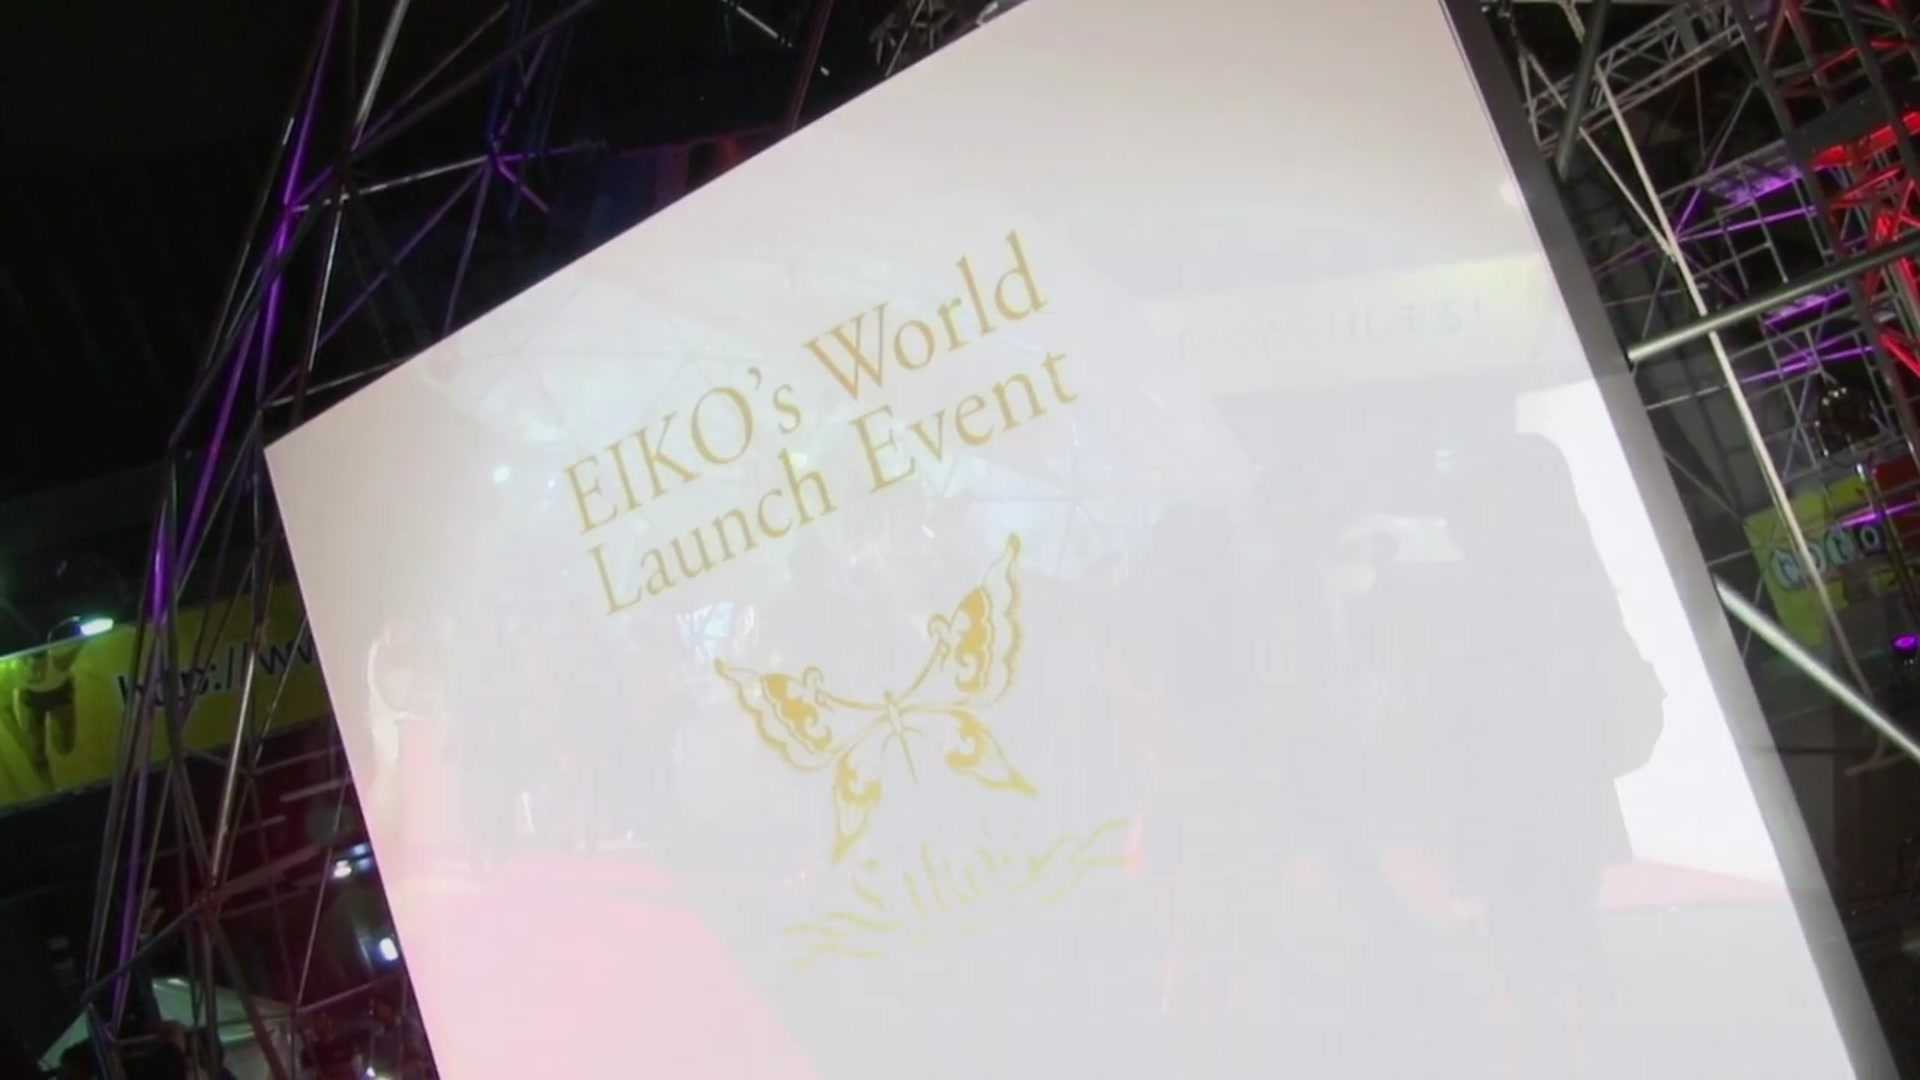 Eiko's World Launch Event